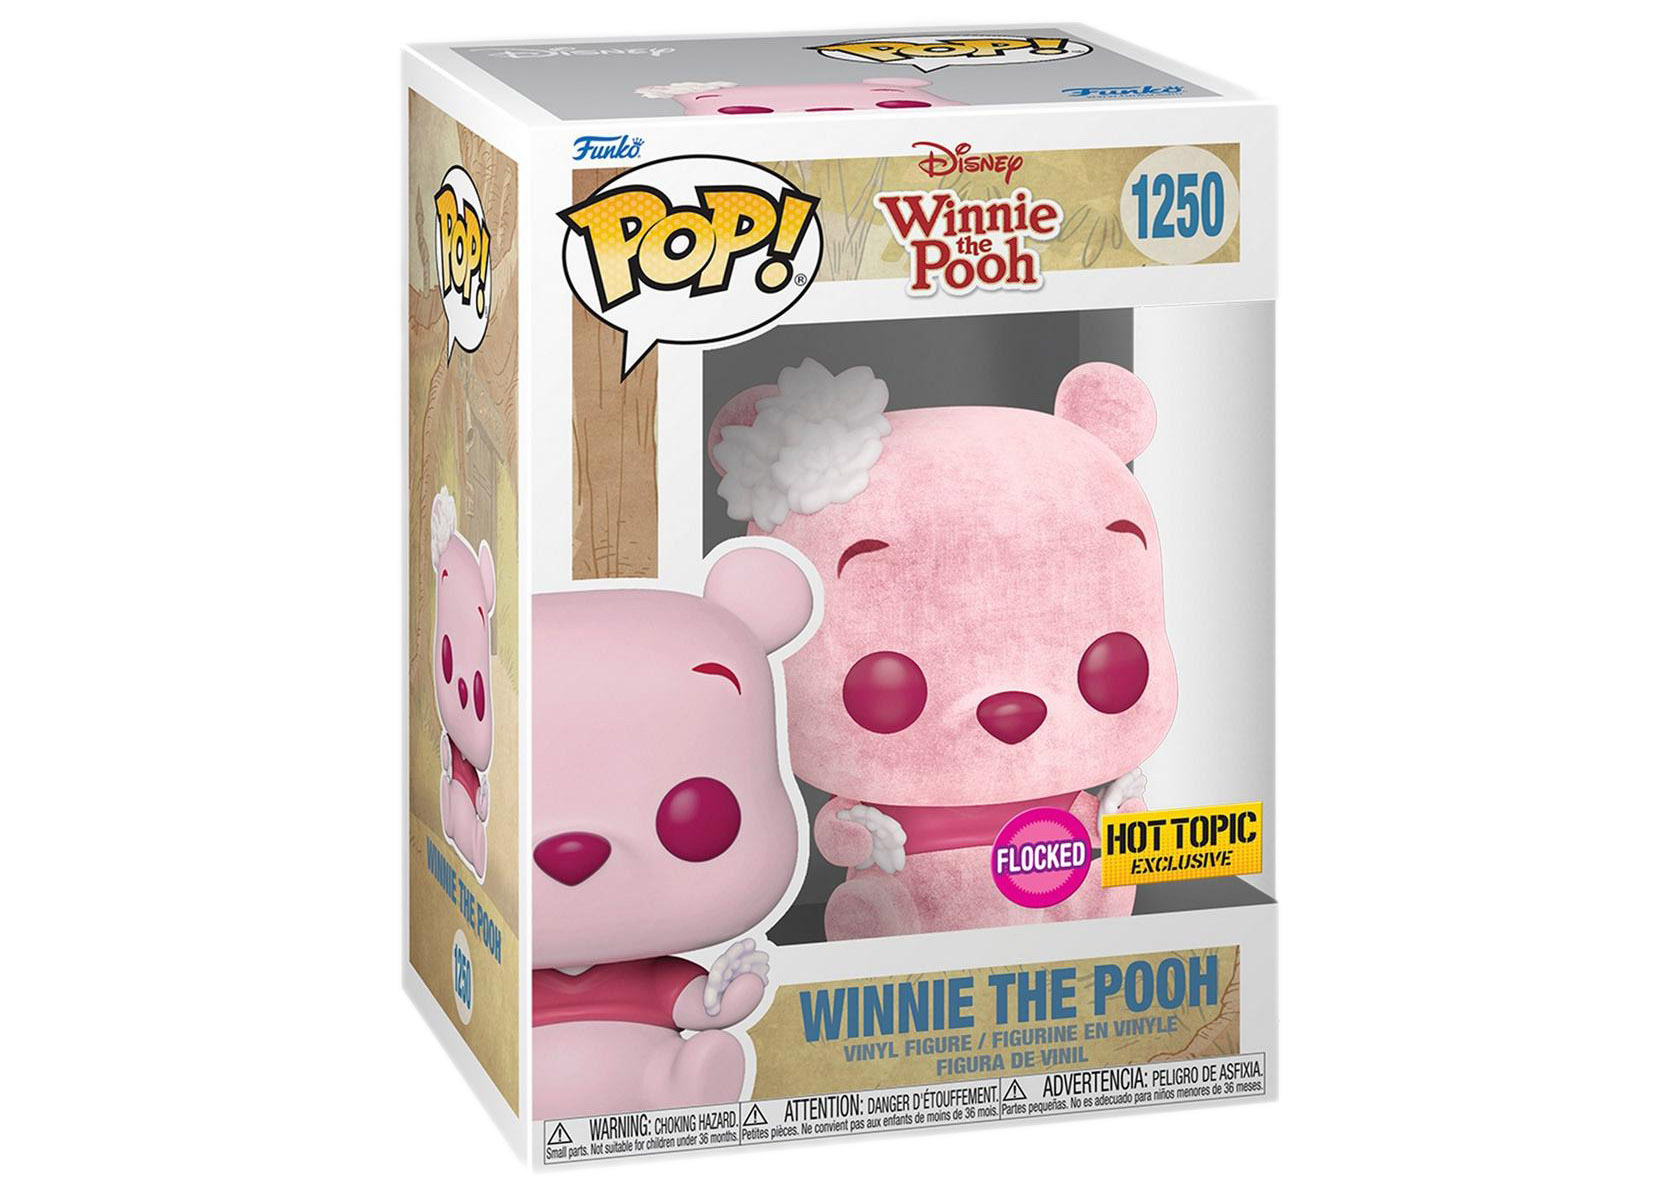 Funko Pop! Disney Winnie the Pooh Flocked Hot Topic Exclusive